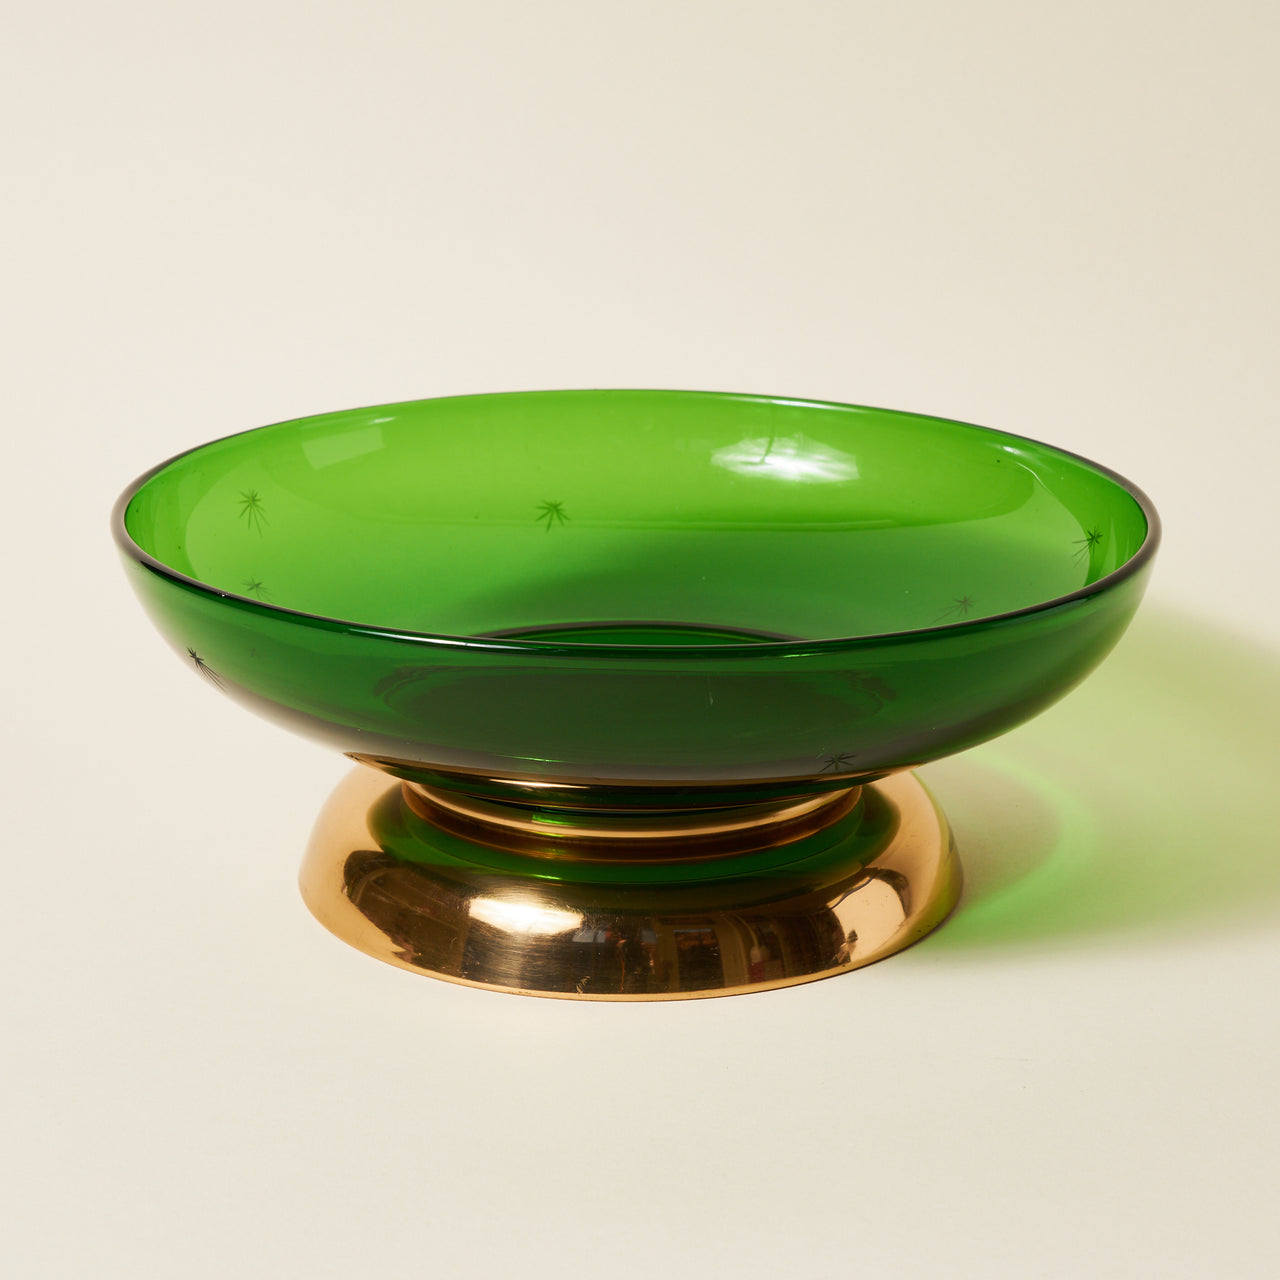 Vintage Green Serving Bowl with Star Details